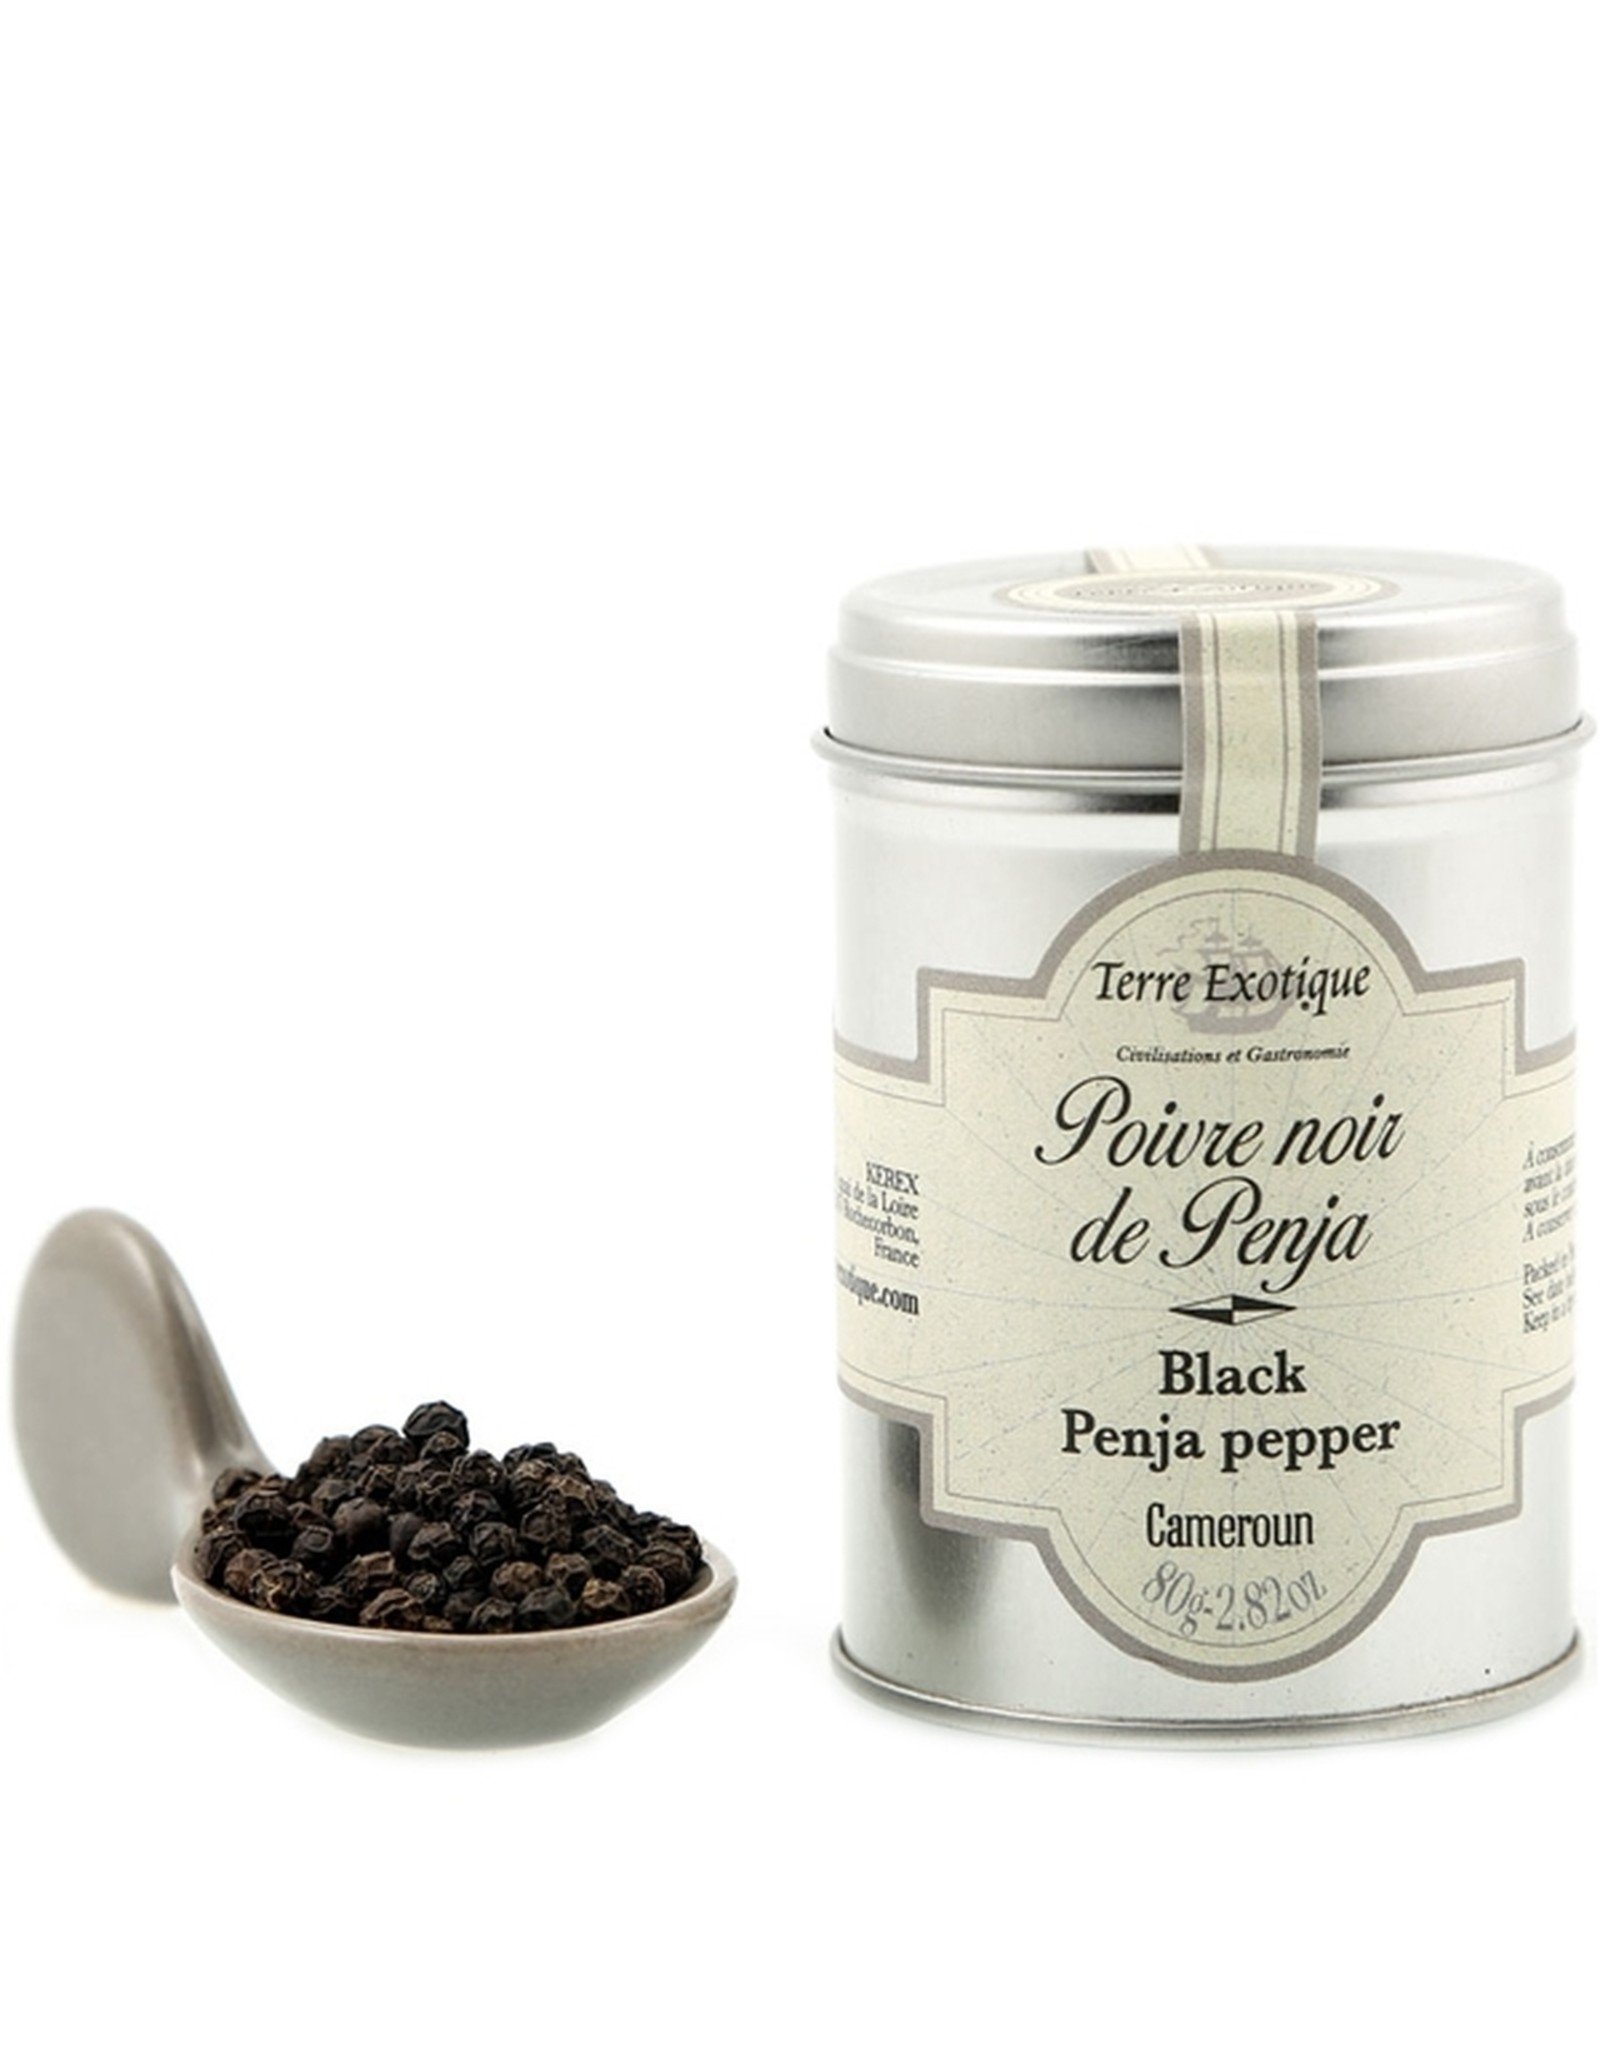 Terra Exotique Penja Black Pepper (Cameroon) - Olive del Mondo: Olive Oils  - Vinegars - Plant-Based